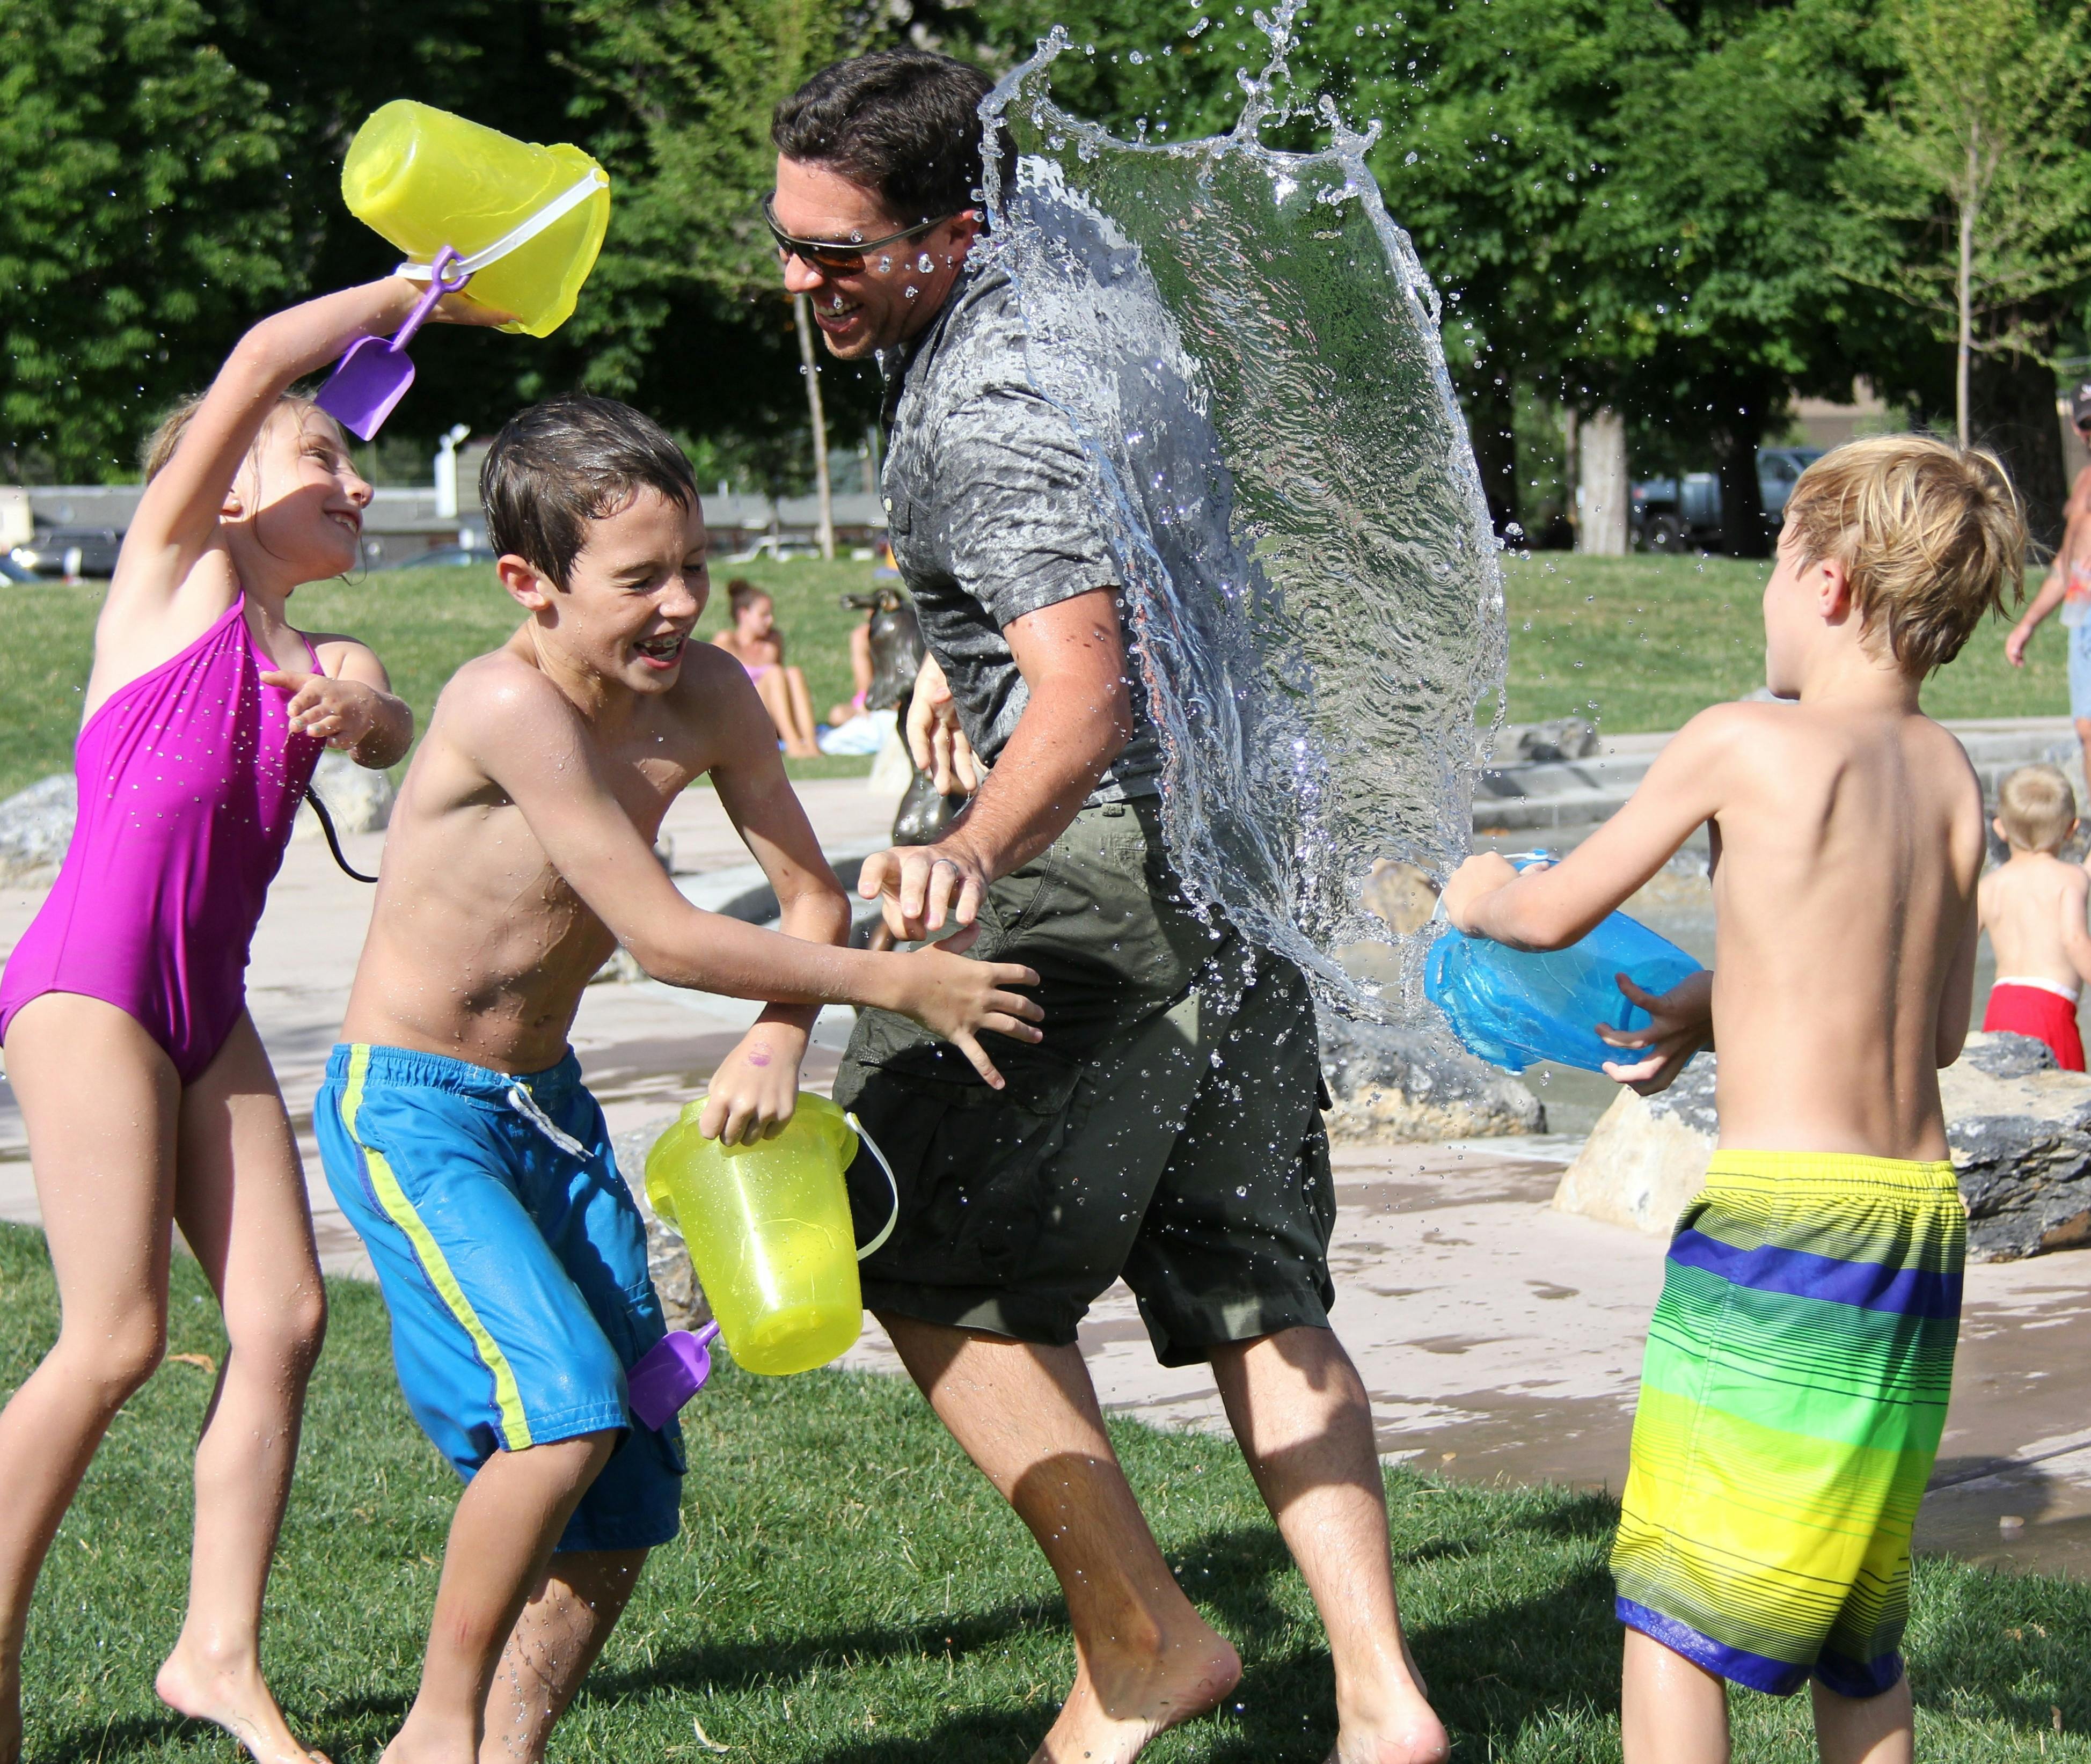 https://static.pexels.com/photos/51349/water-fight-children-water-play-51349.jpeg